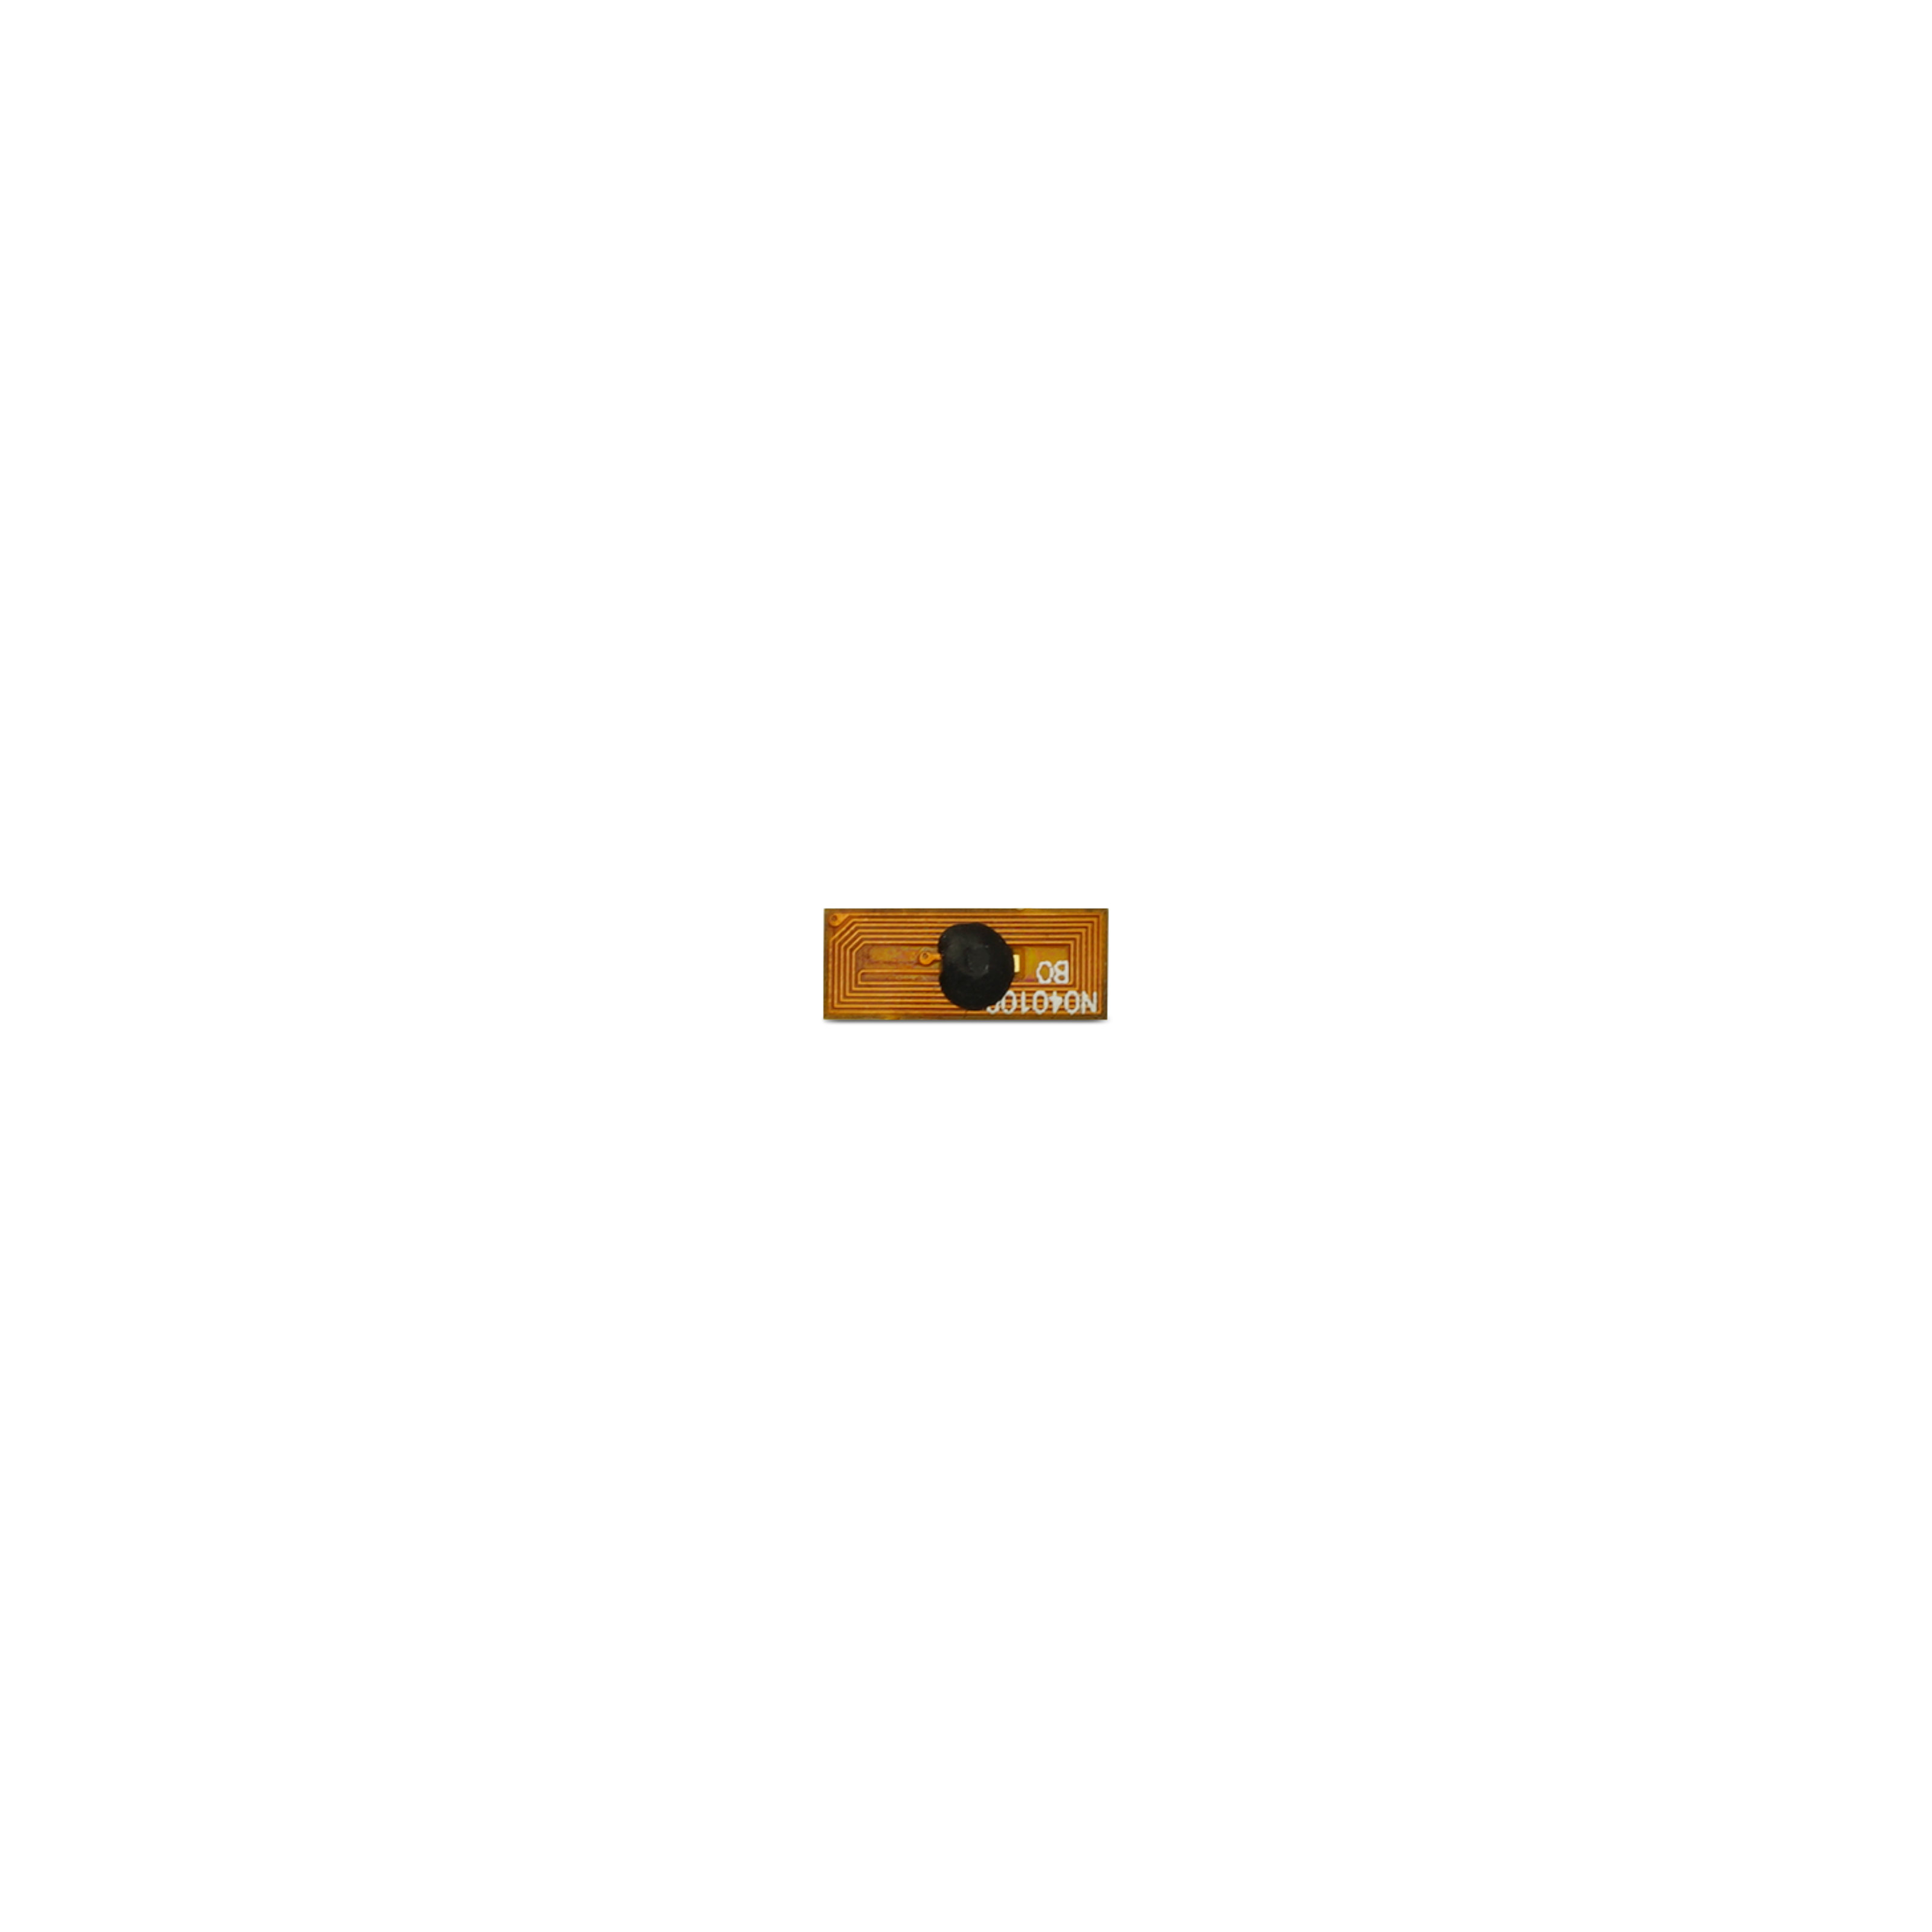 NFC Sticker FPC - 4 x 10 mm - NTAG213 - 180 Byte - gold